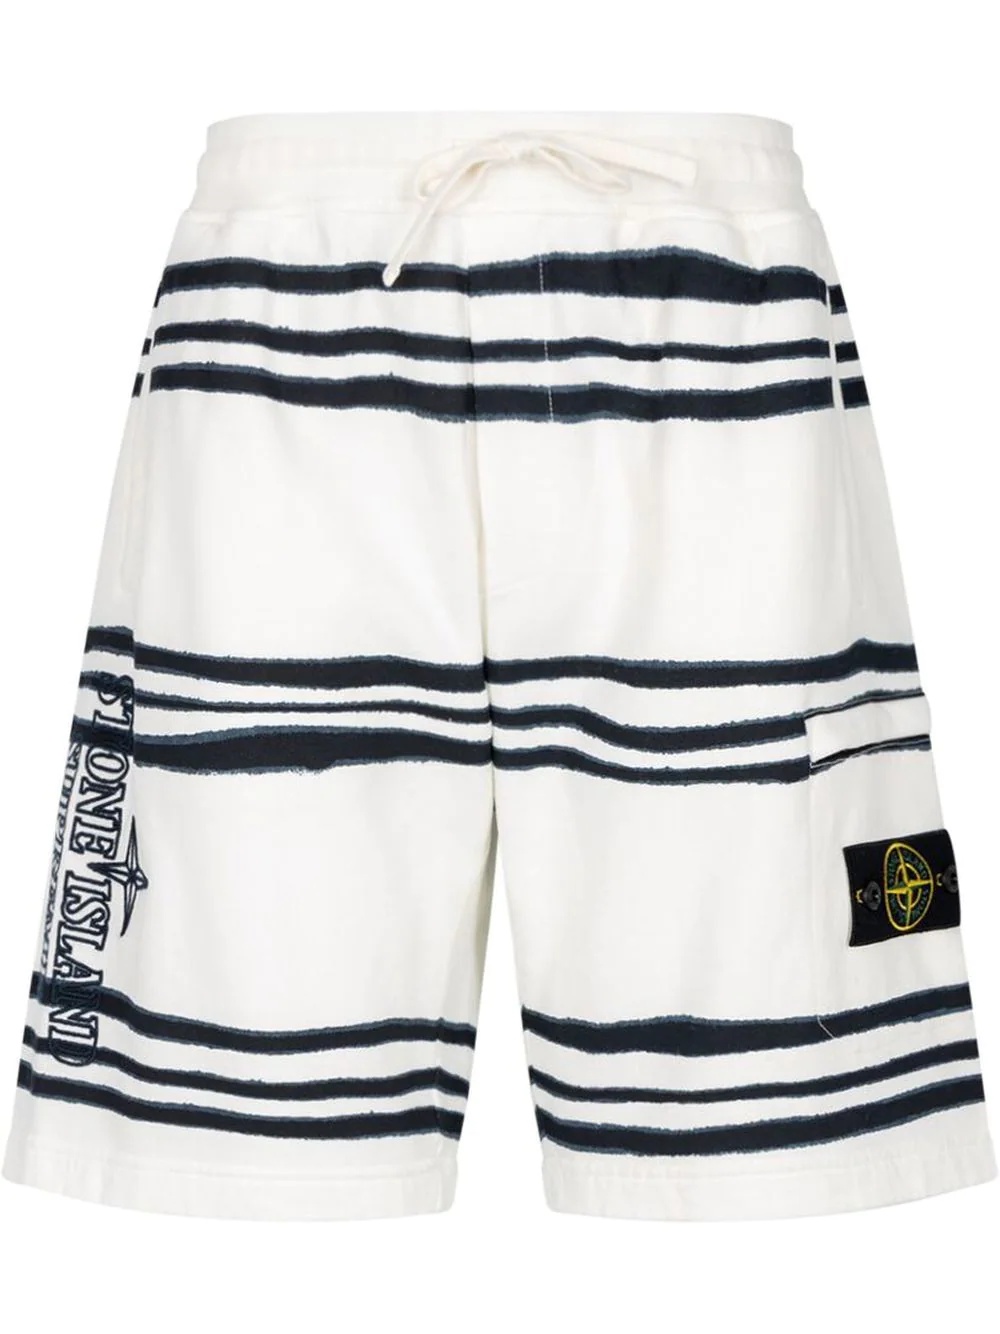 x Stone Island striped shorts - 1